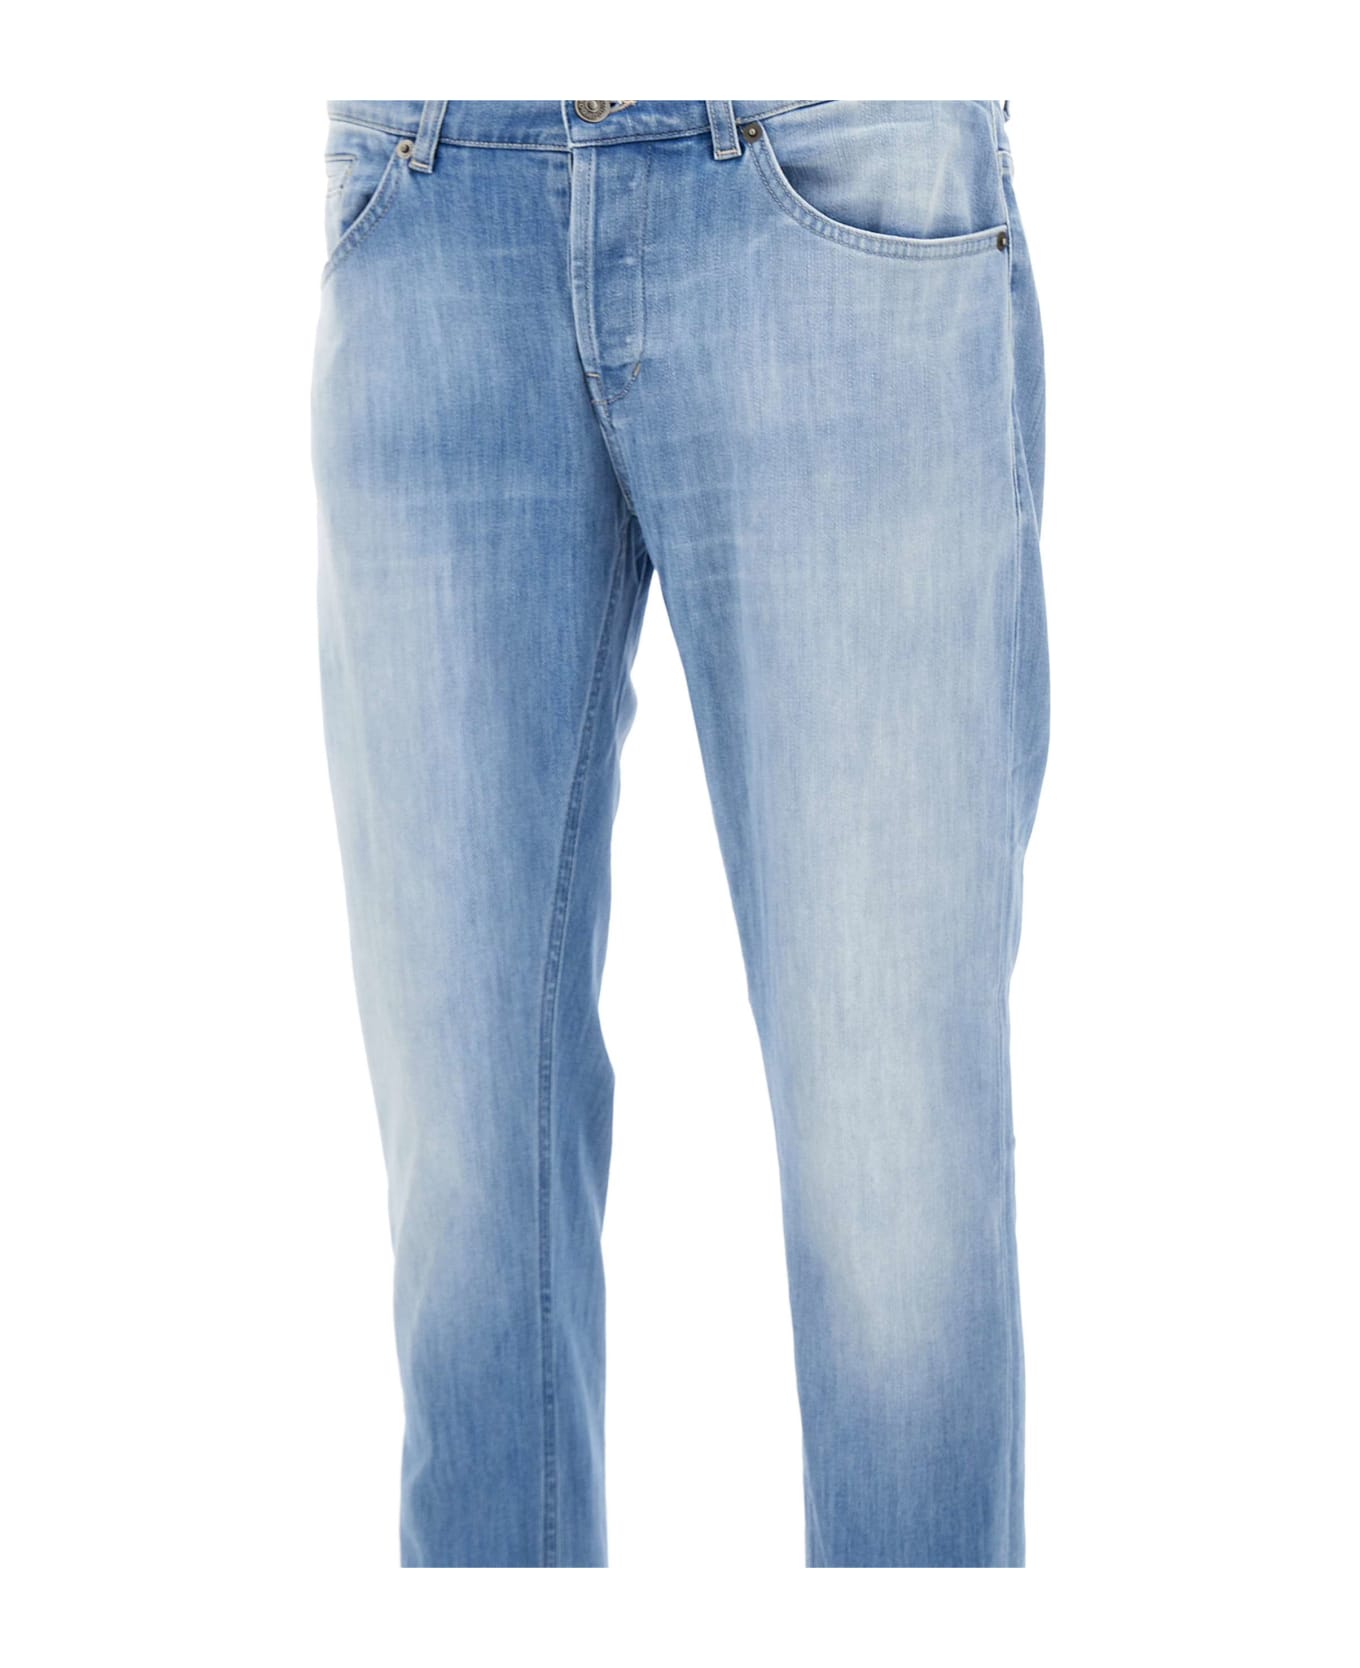 Dondup "george" Jeans - LIGHT BLUE